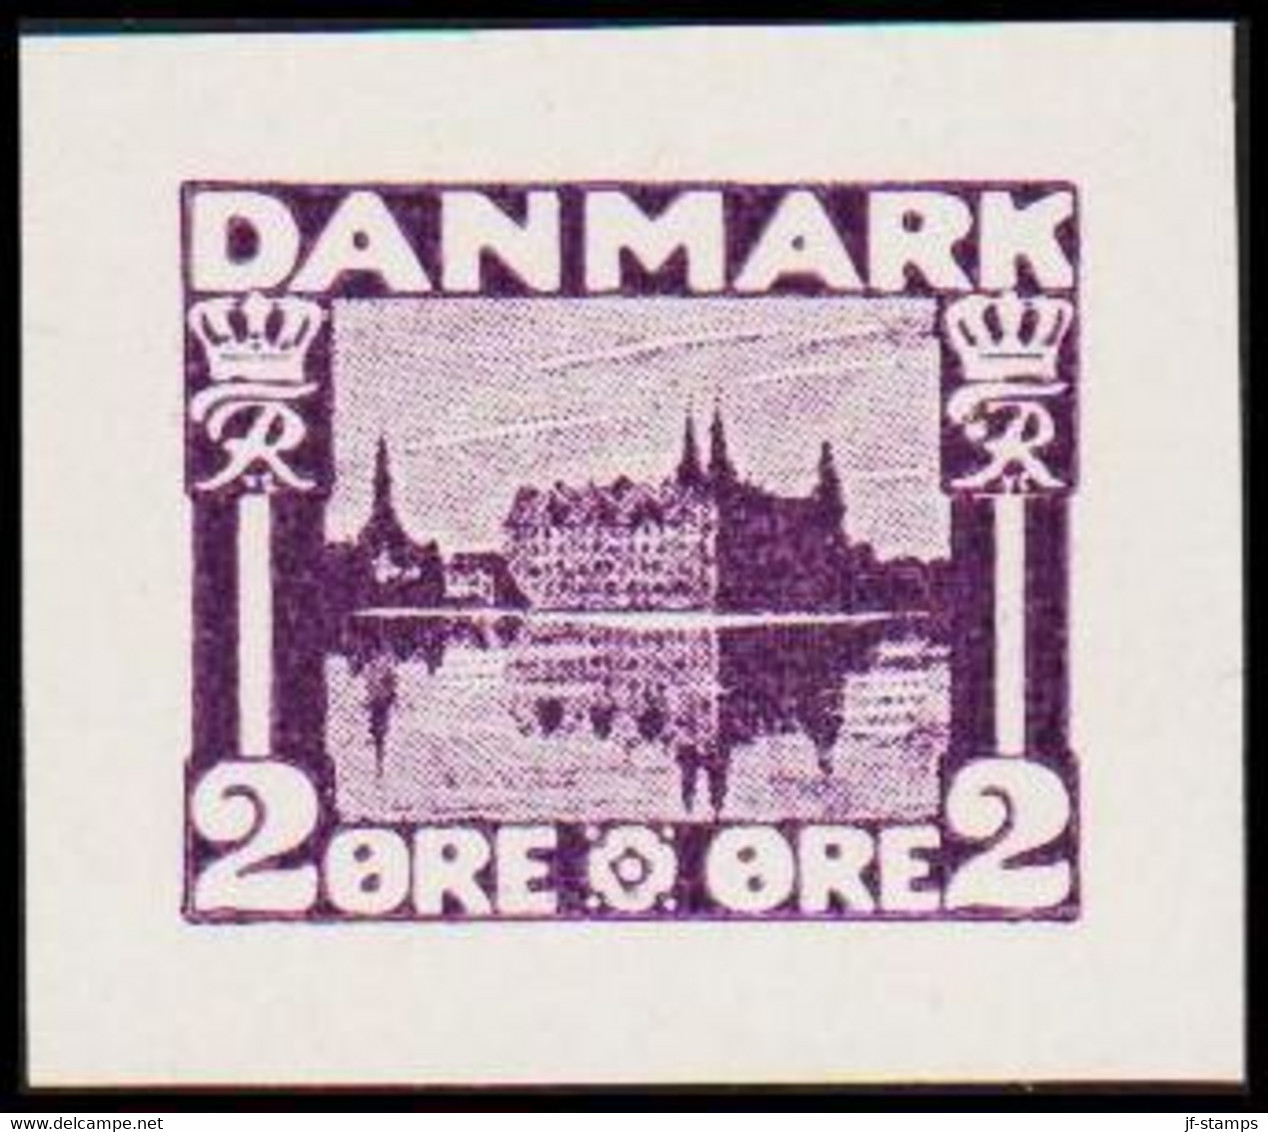 1930. DANMARK. Essay. København - Frederiksborg Slot. 2 øre. - JF525405 - Essais & Réimpressions